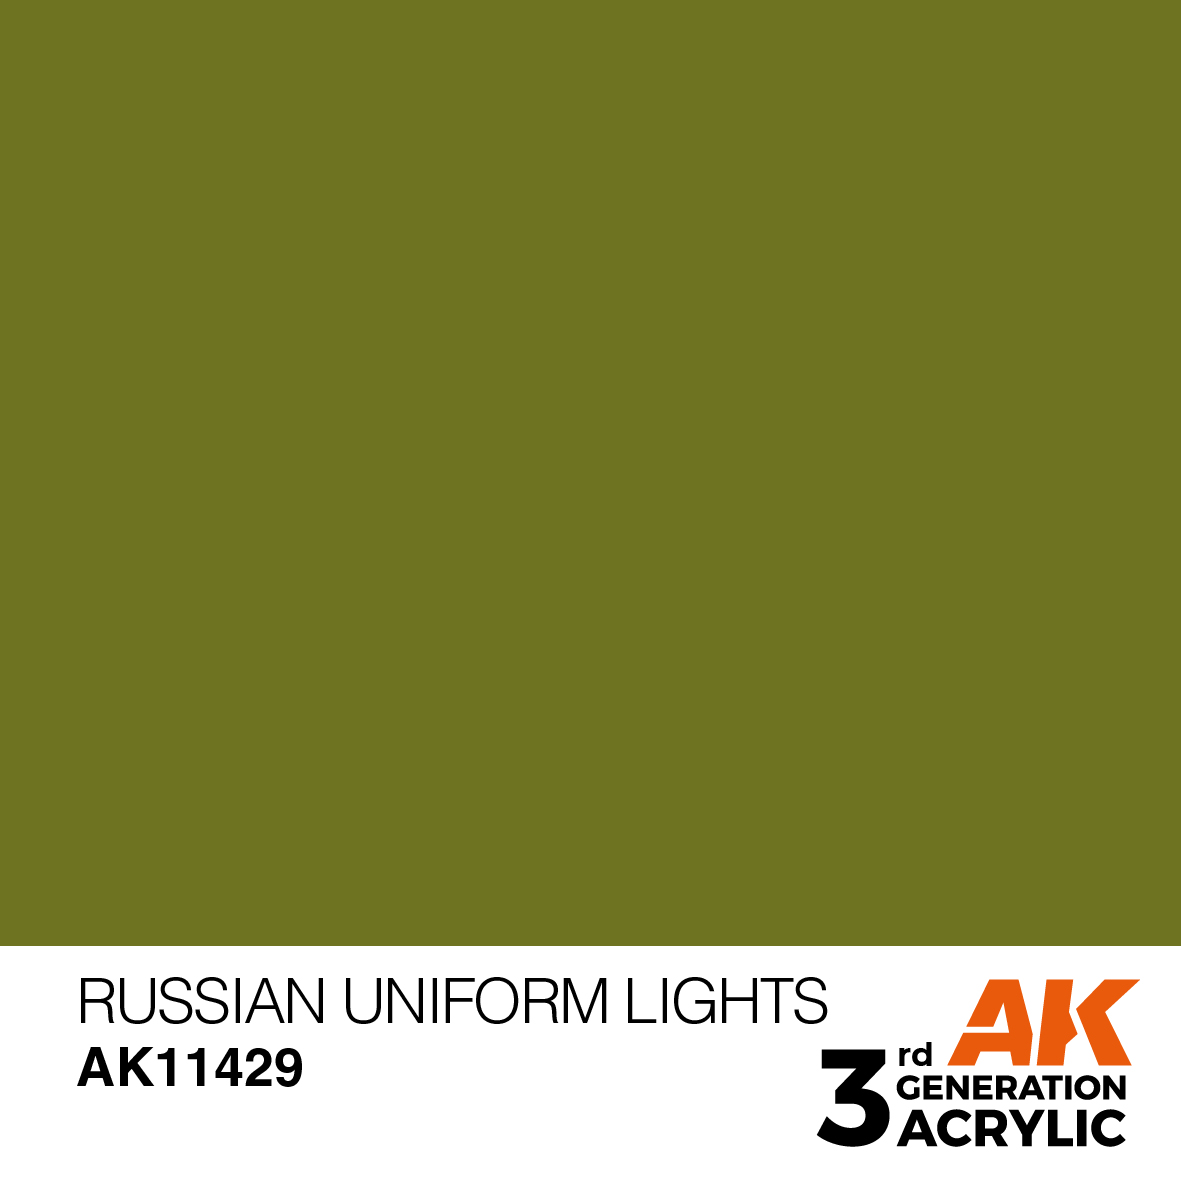 RUSSIAN UNIFORM LIGHTS – FIGURES